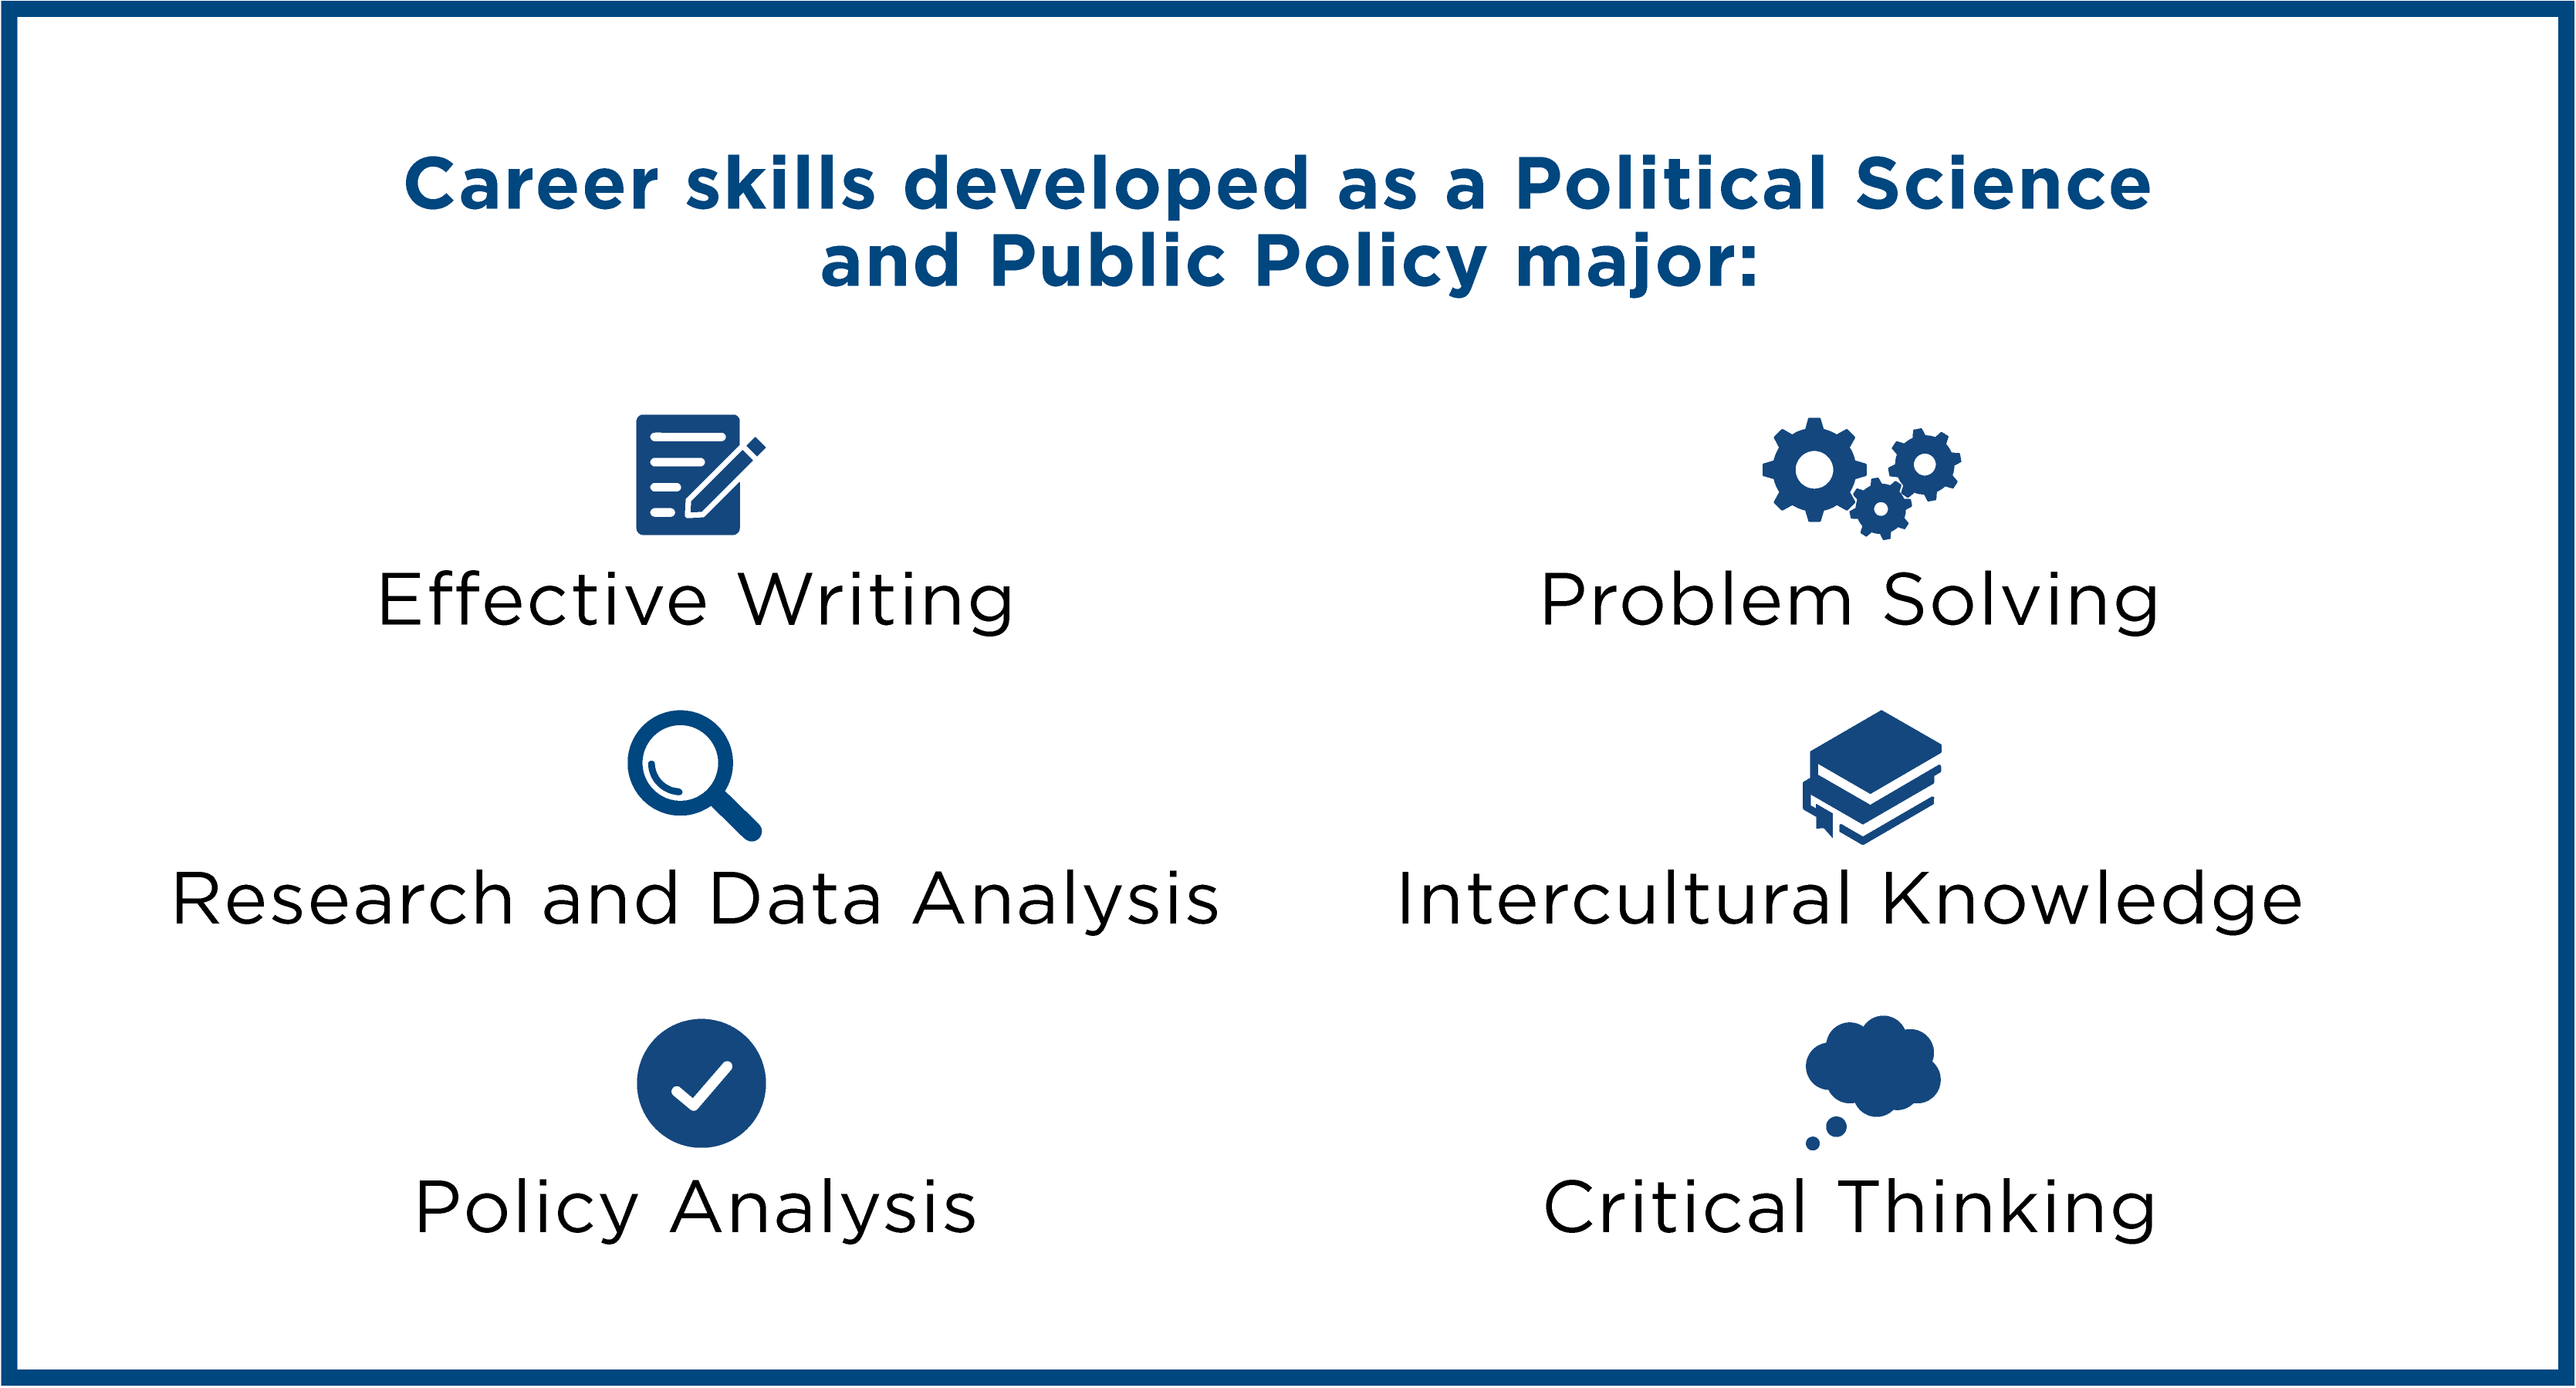 phd public policy vs political science